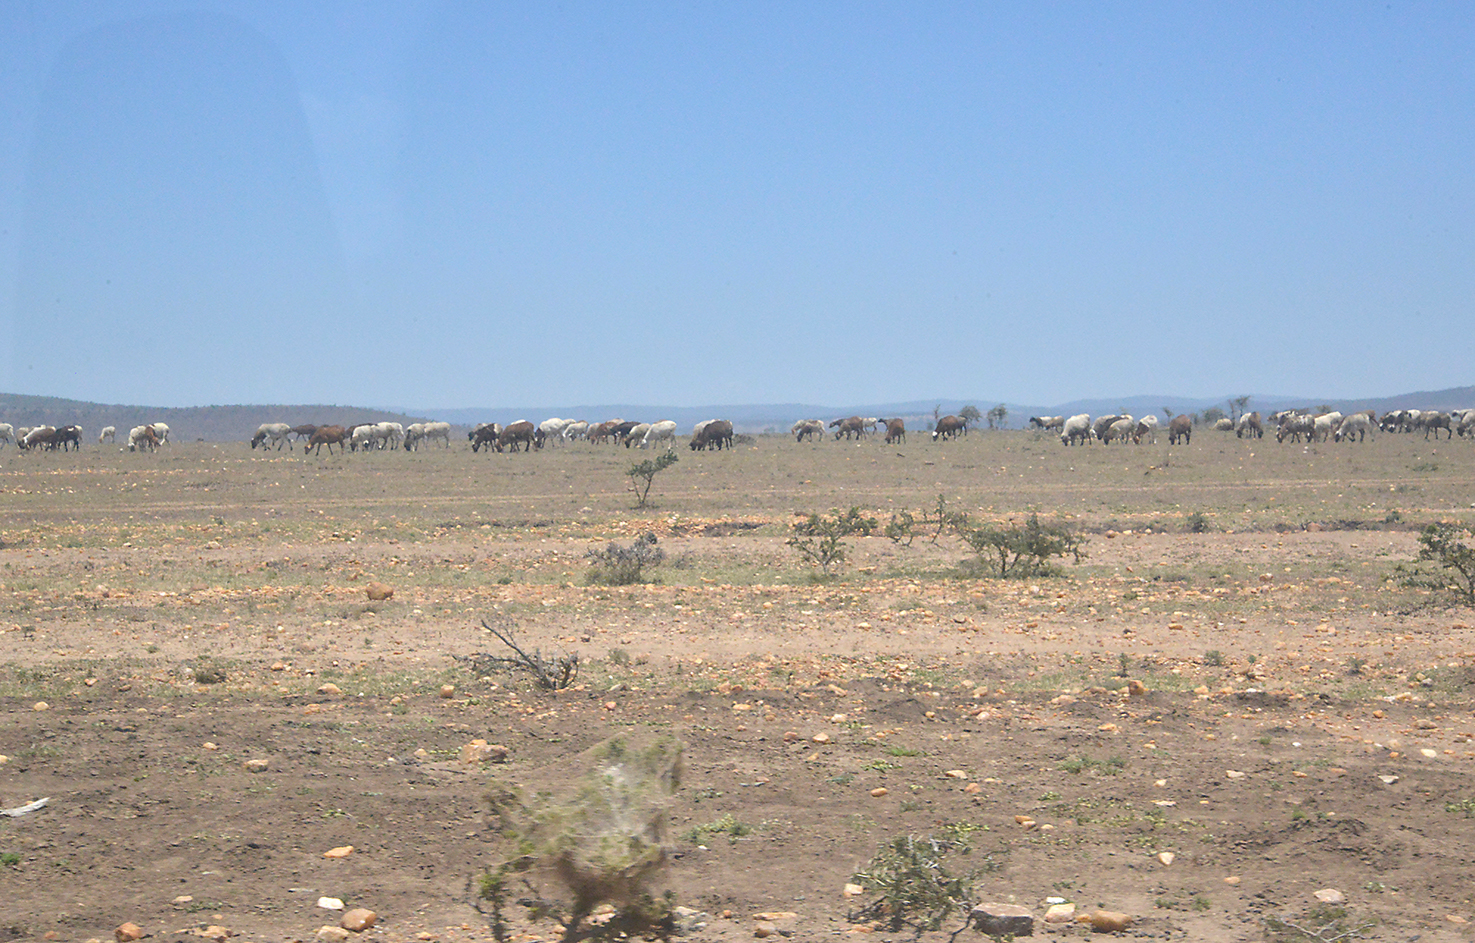 002 Masai Mara 1